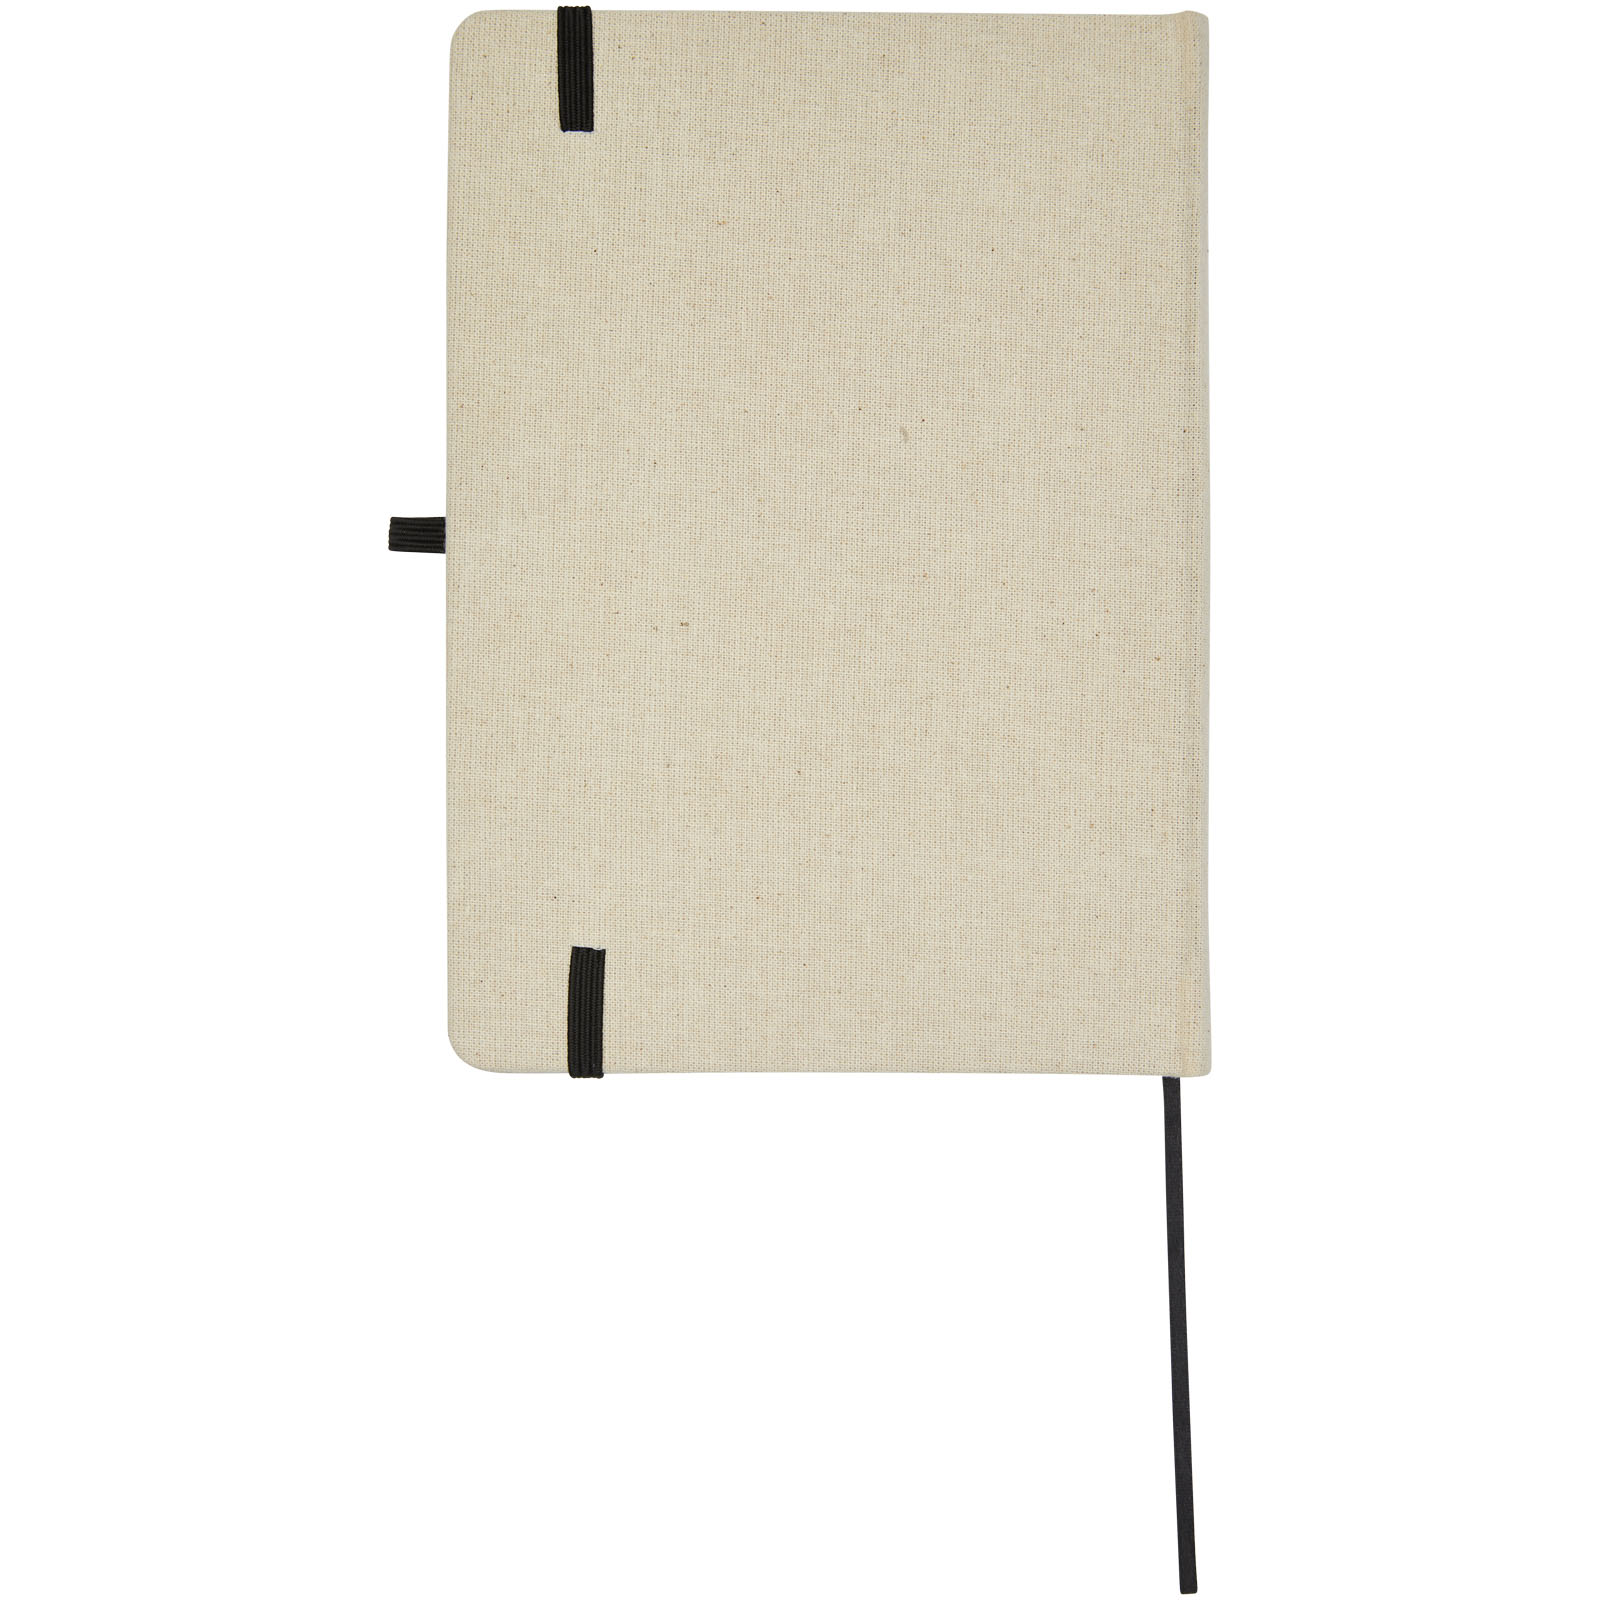 Advertising Hard cover notebooks - Tutico organic cotton hardcover notebook - 2